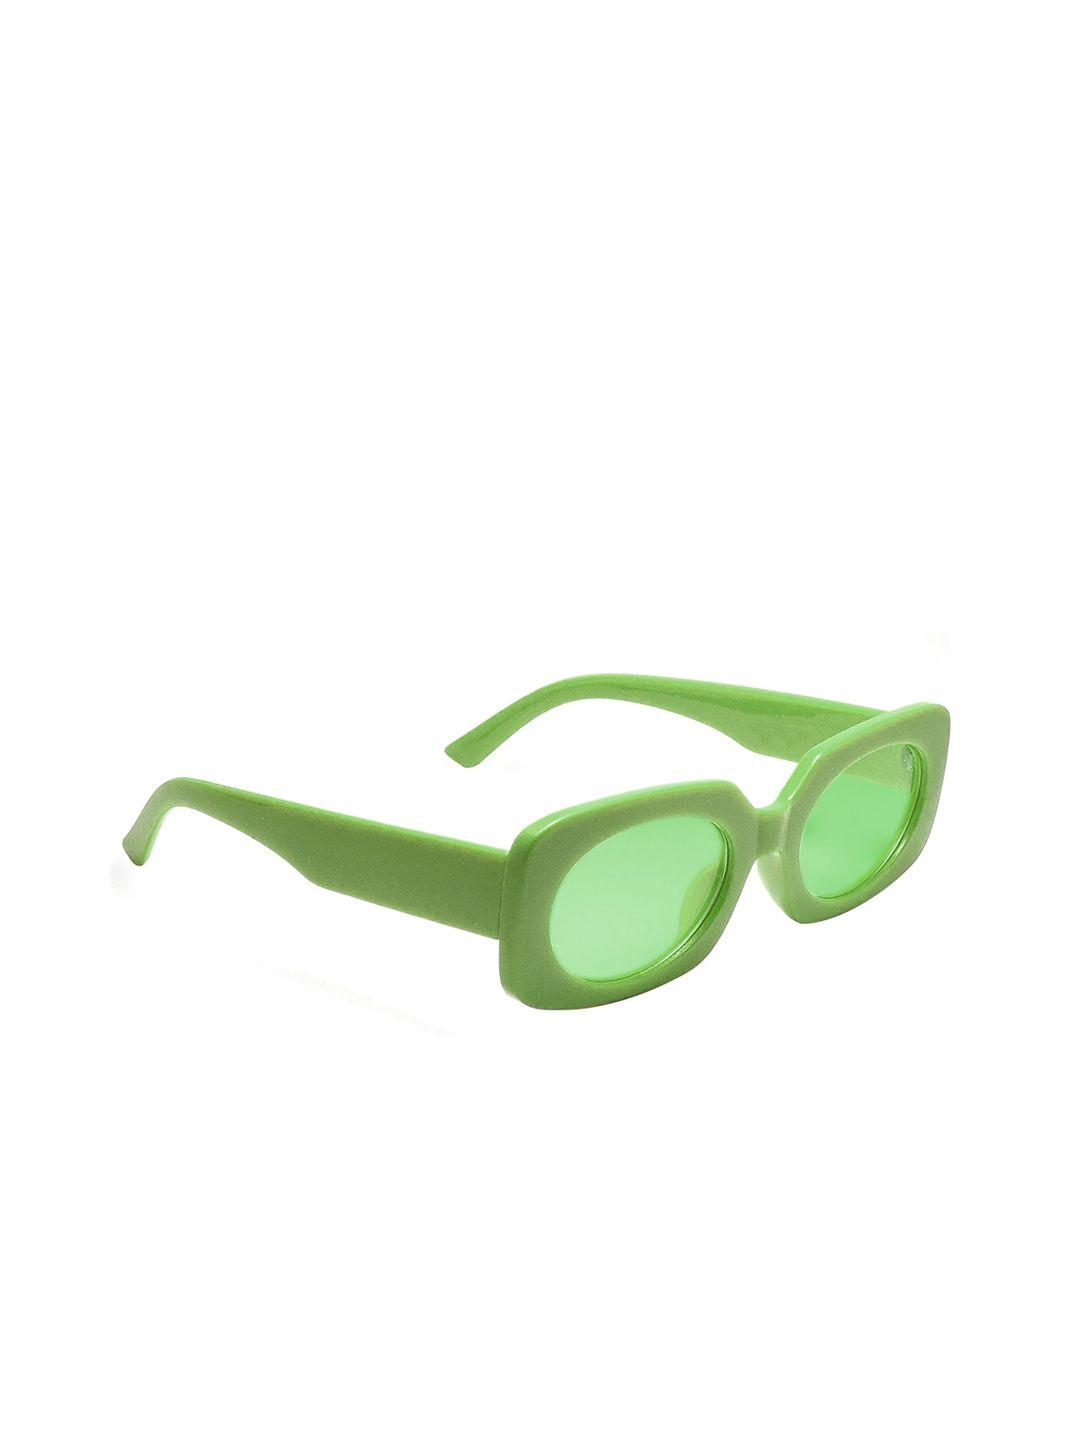 peter jones eyewear  lens & green square sunglasses with uv protected lens